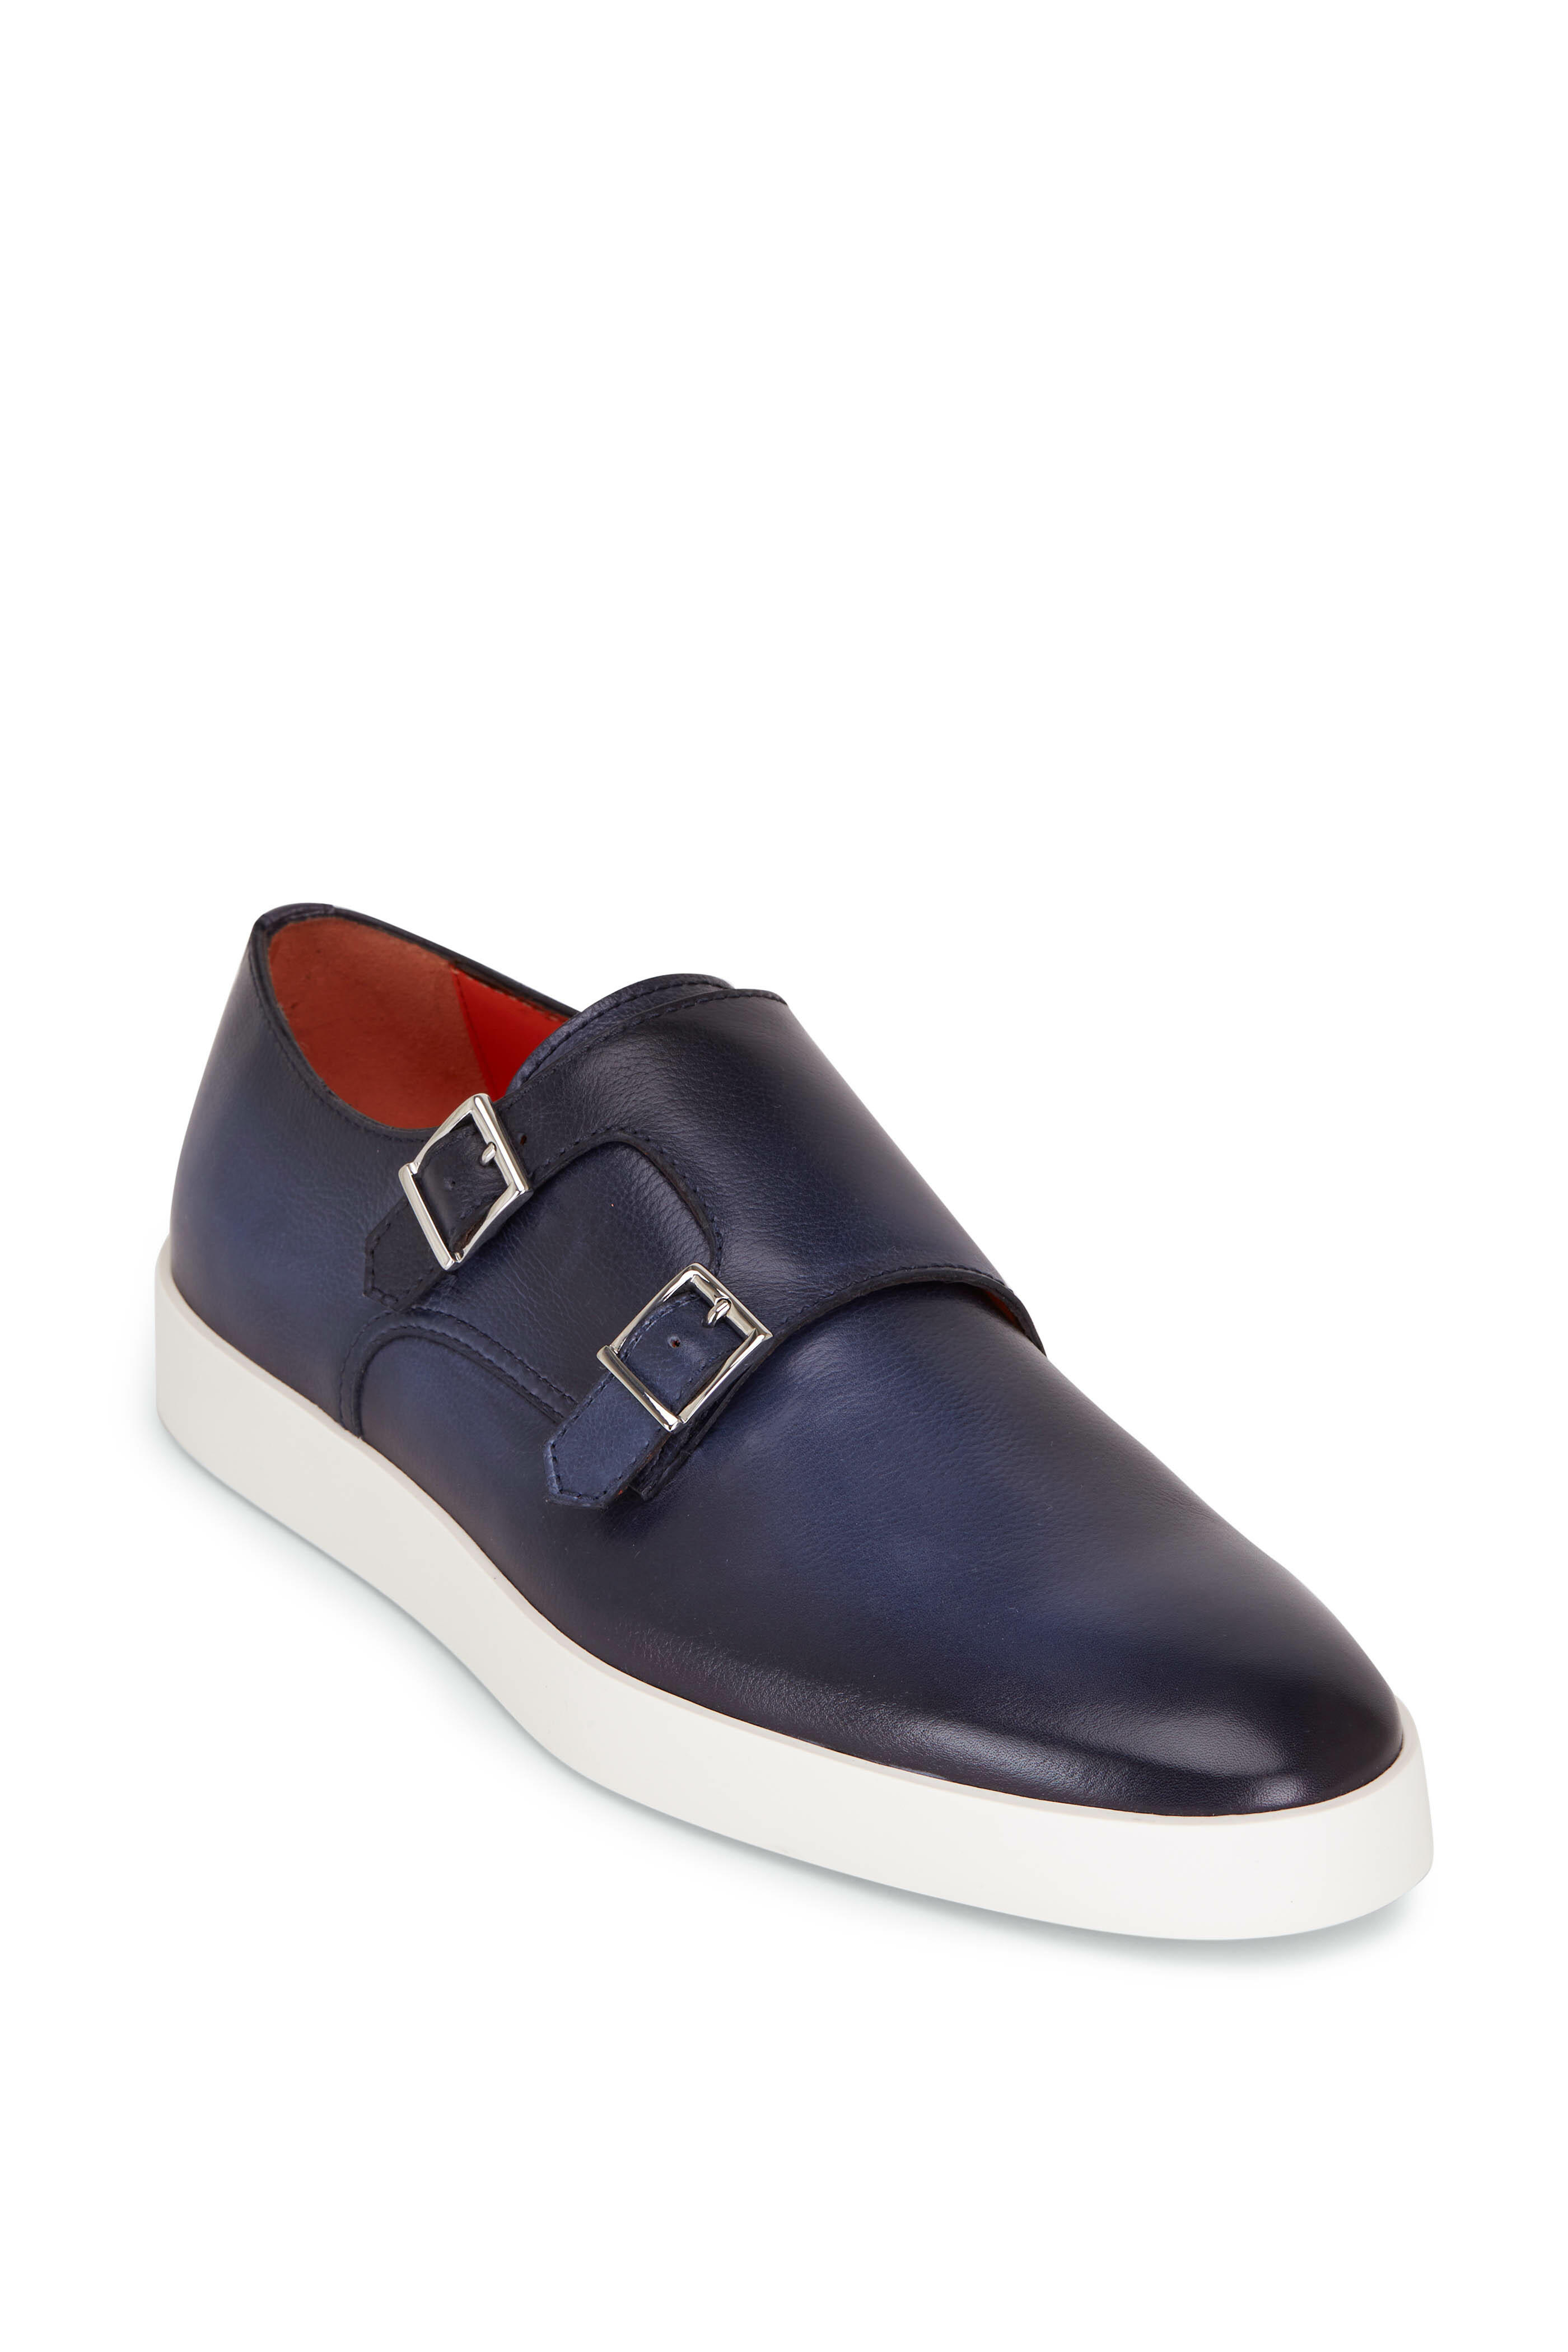 Santoni - Bankable Blue Leather Dress Shoe | Mitchell Stores